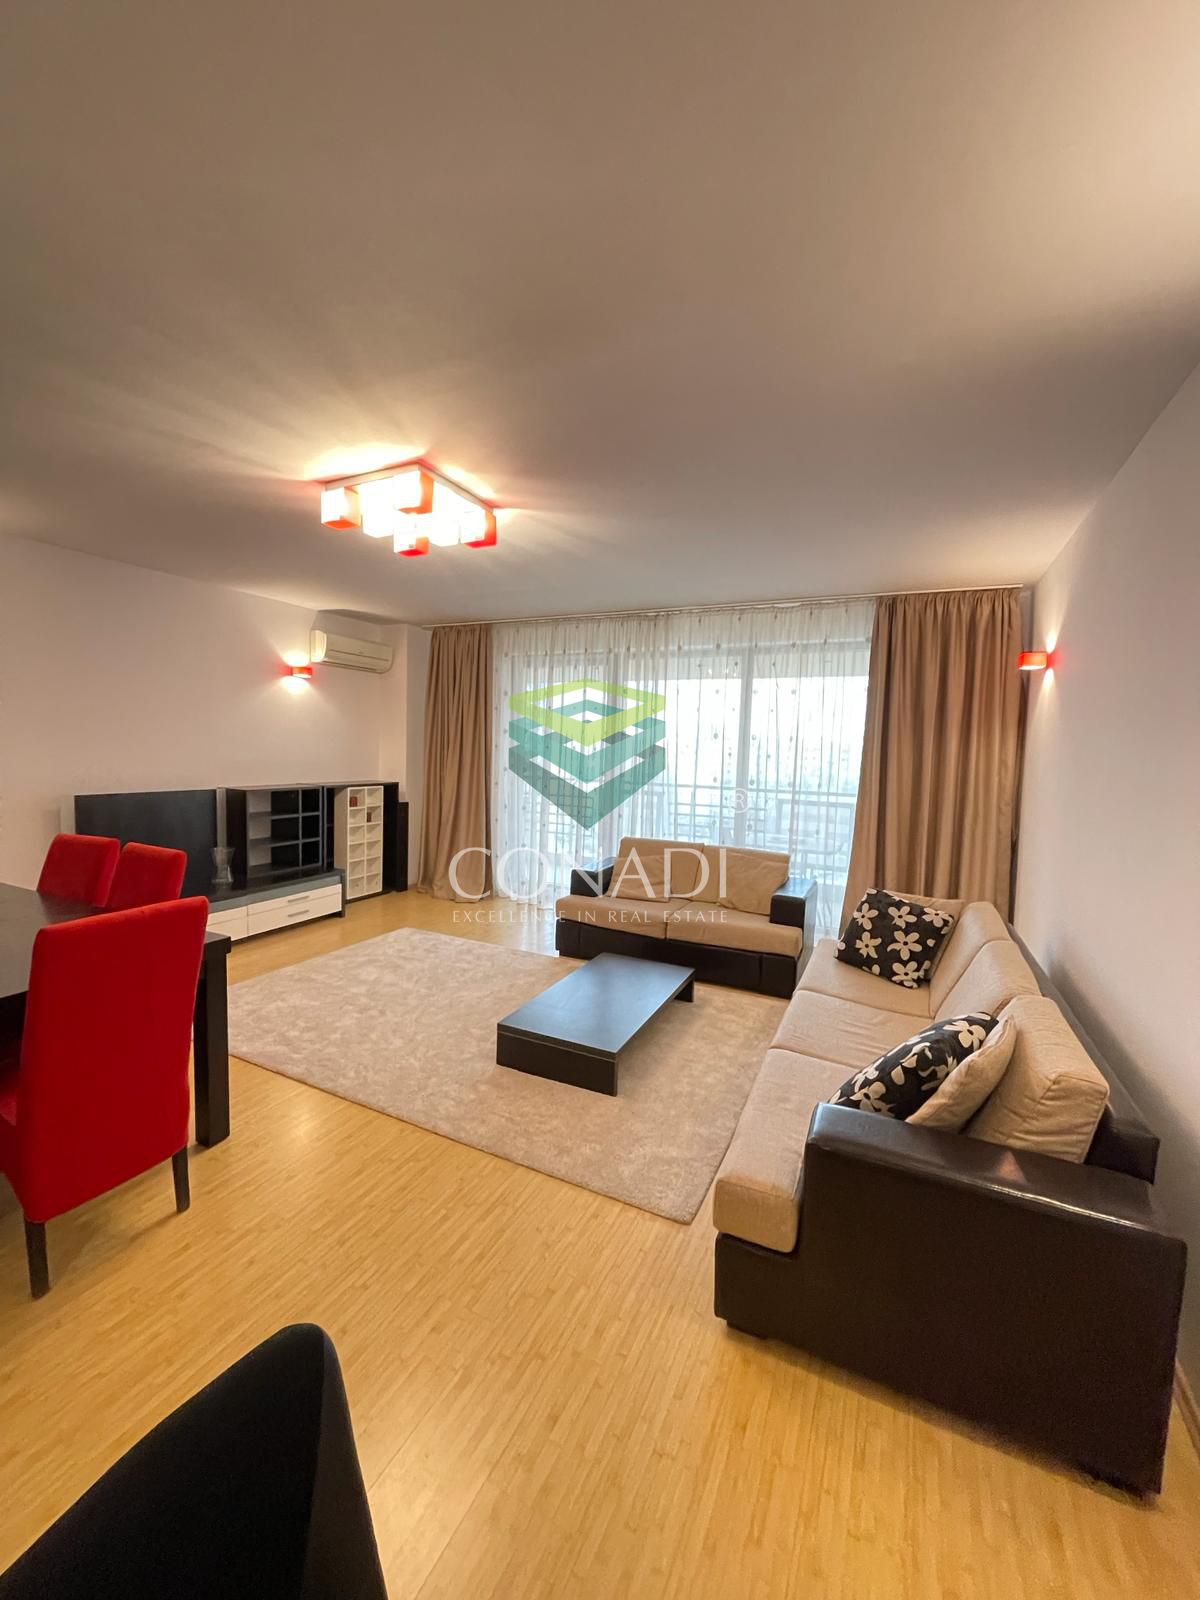 2-room apartment for sale, Circului Park